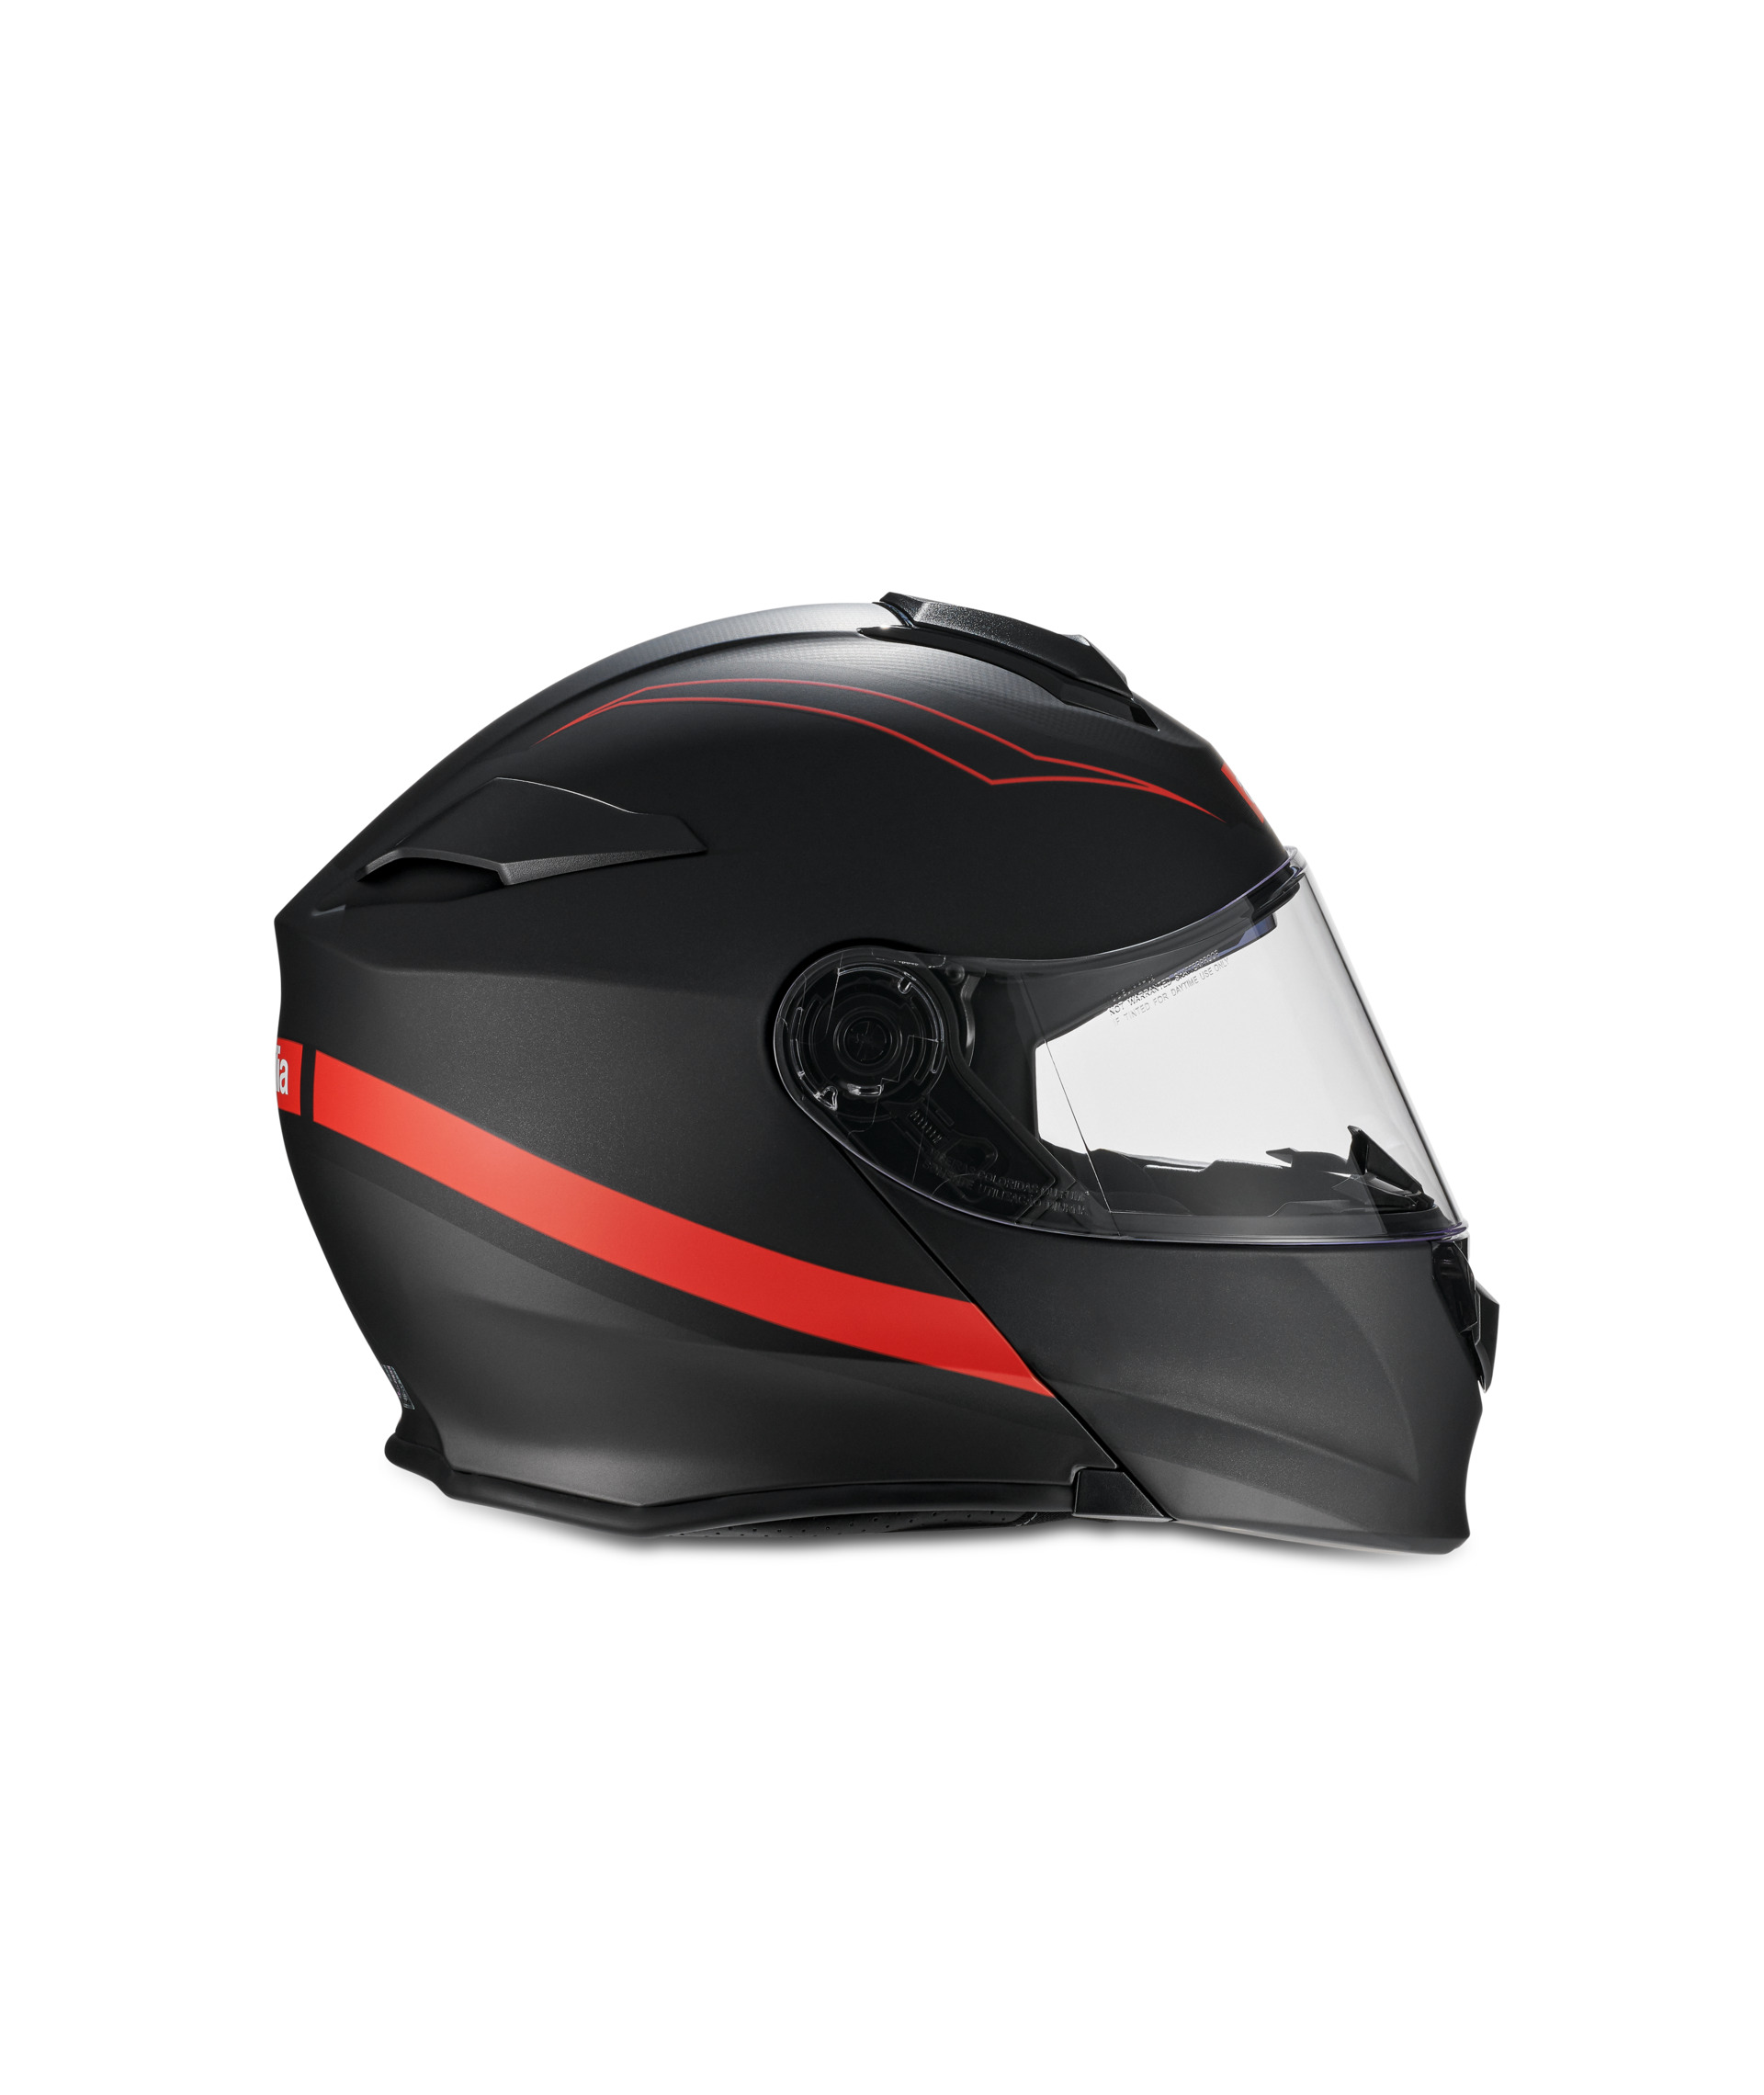 Modular Helmet with Built-In Bluetooth | Modular Helmets | Helmets ...